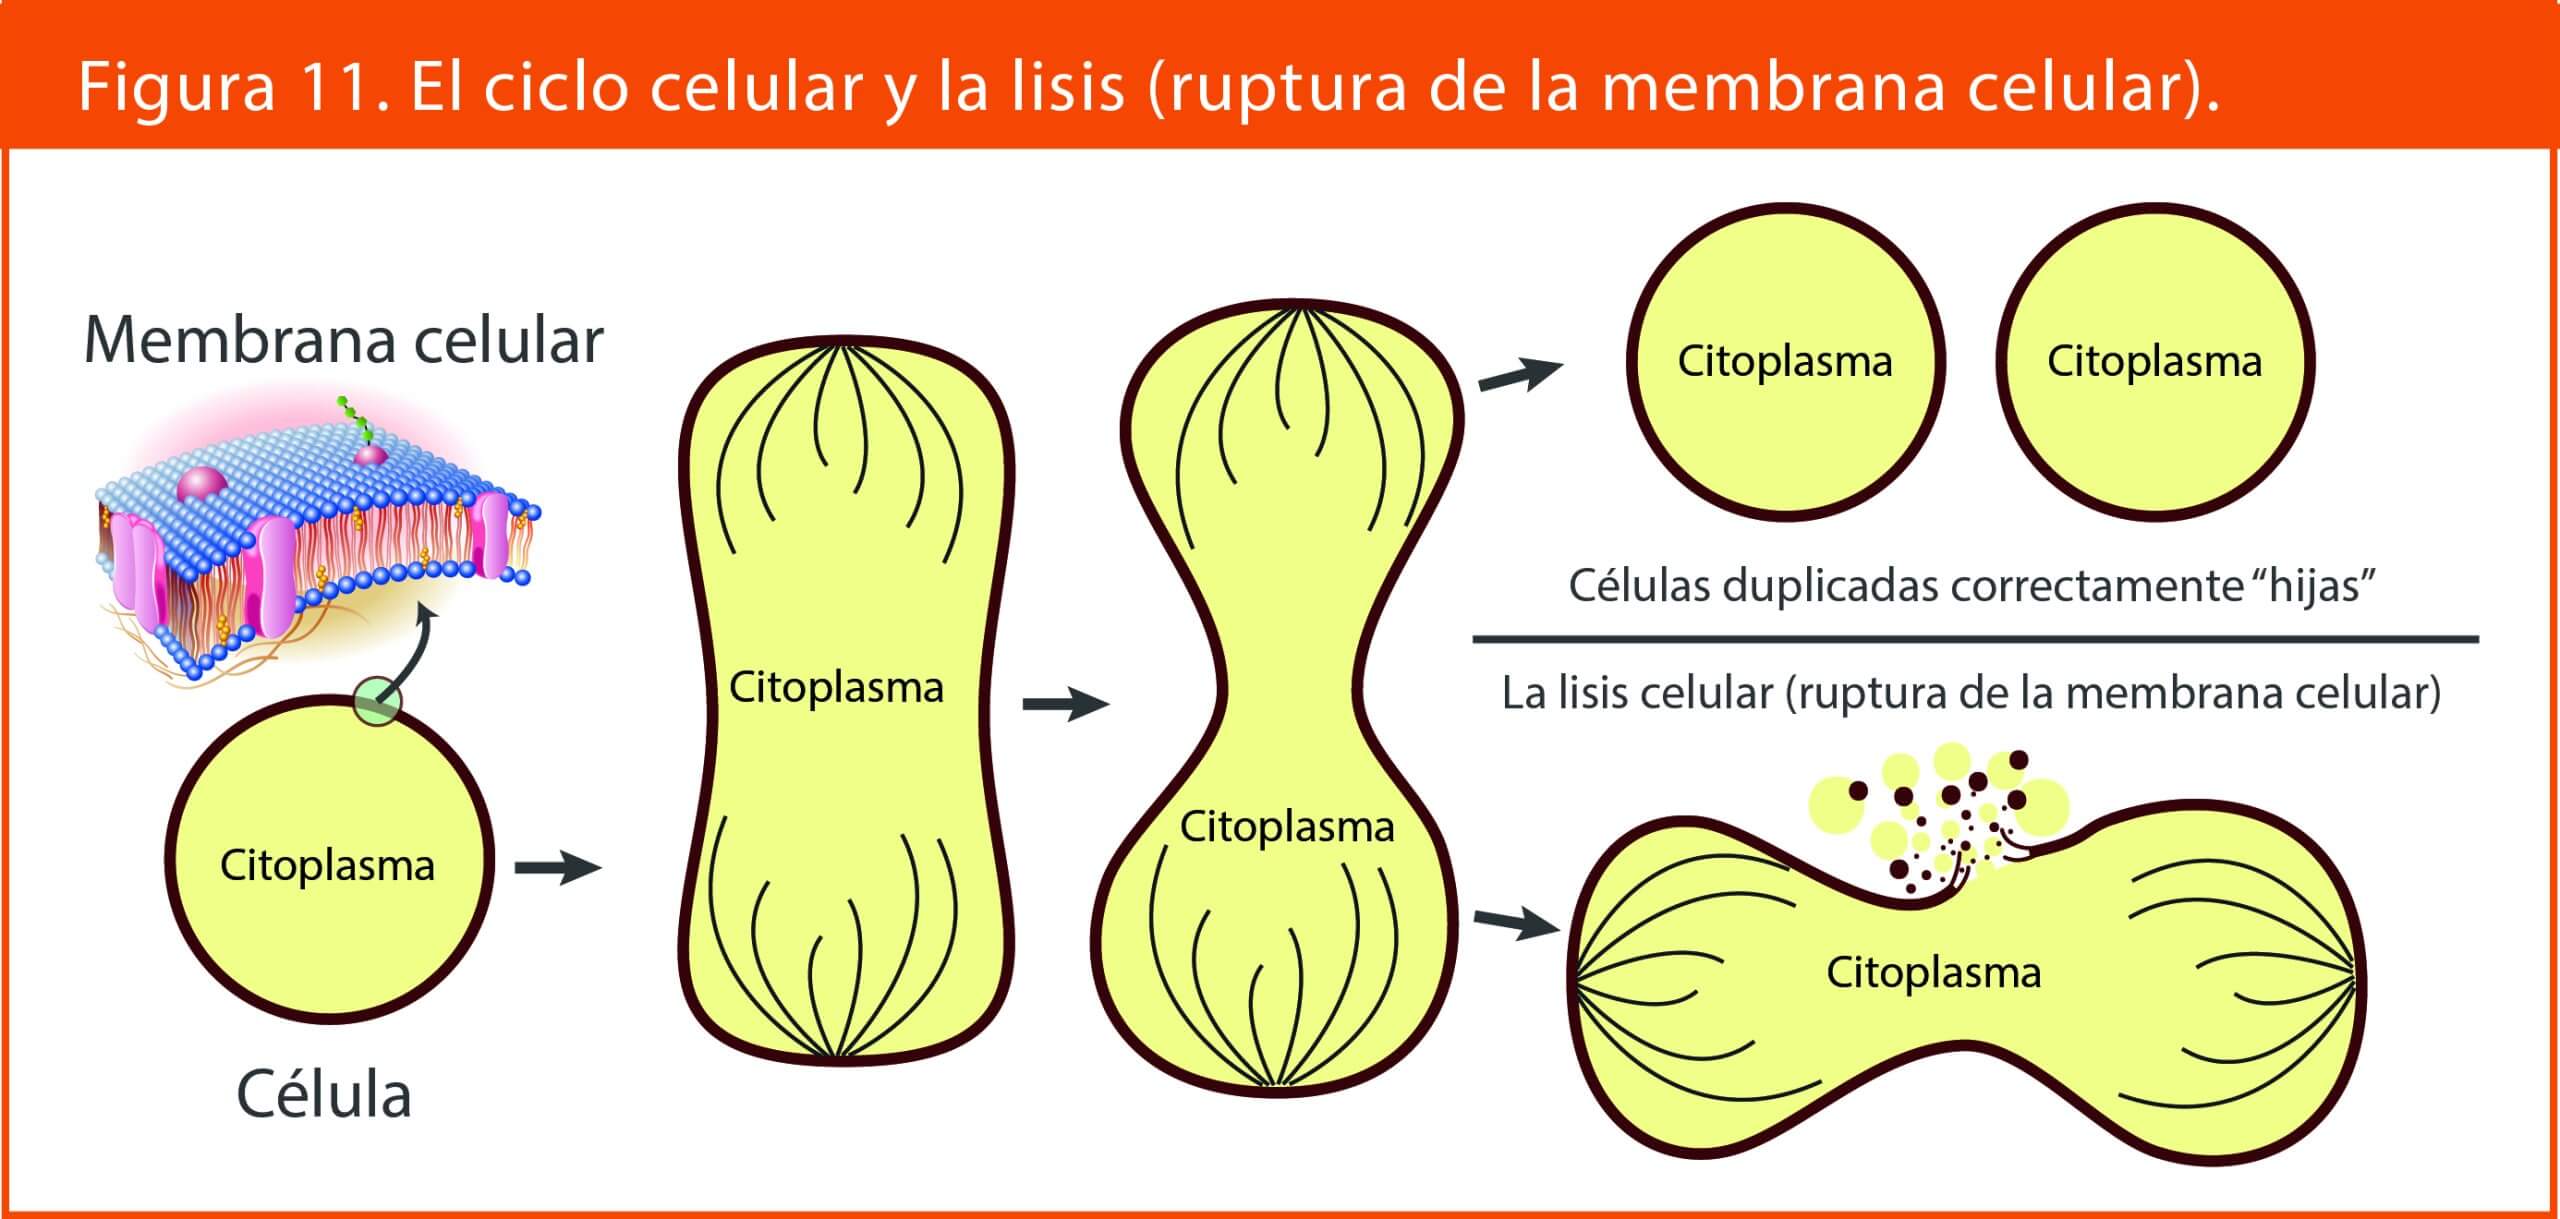 imagen del ciclo celular y la ruptura de la membrana celular